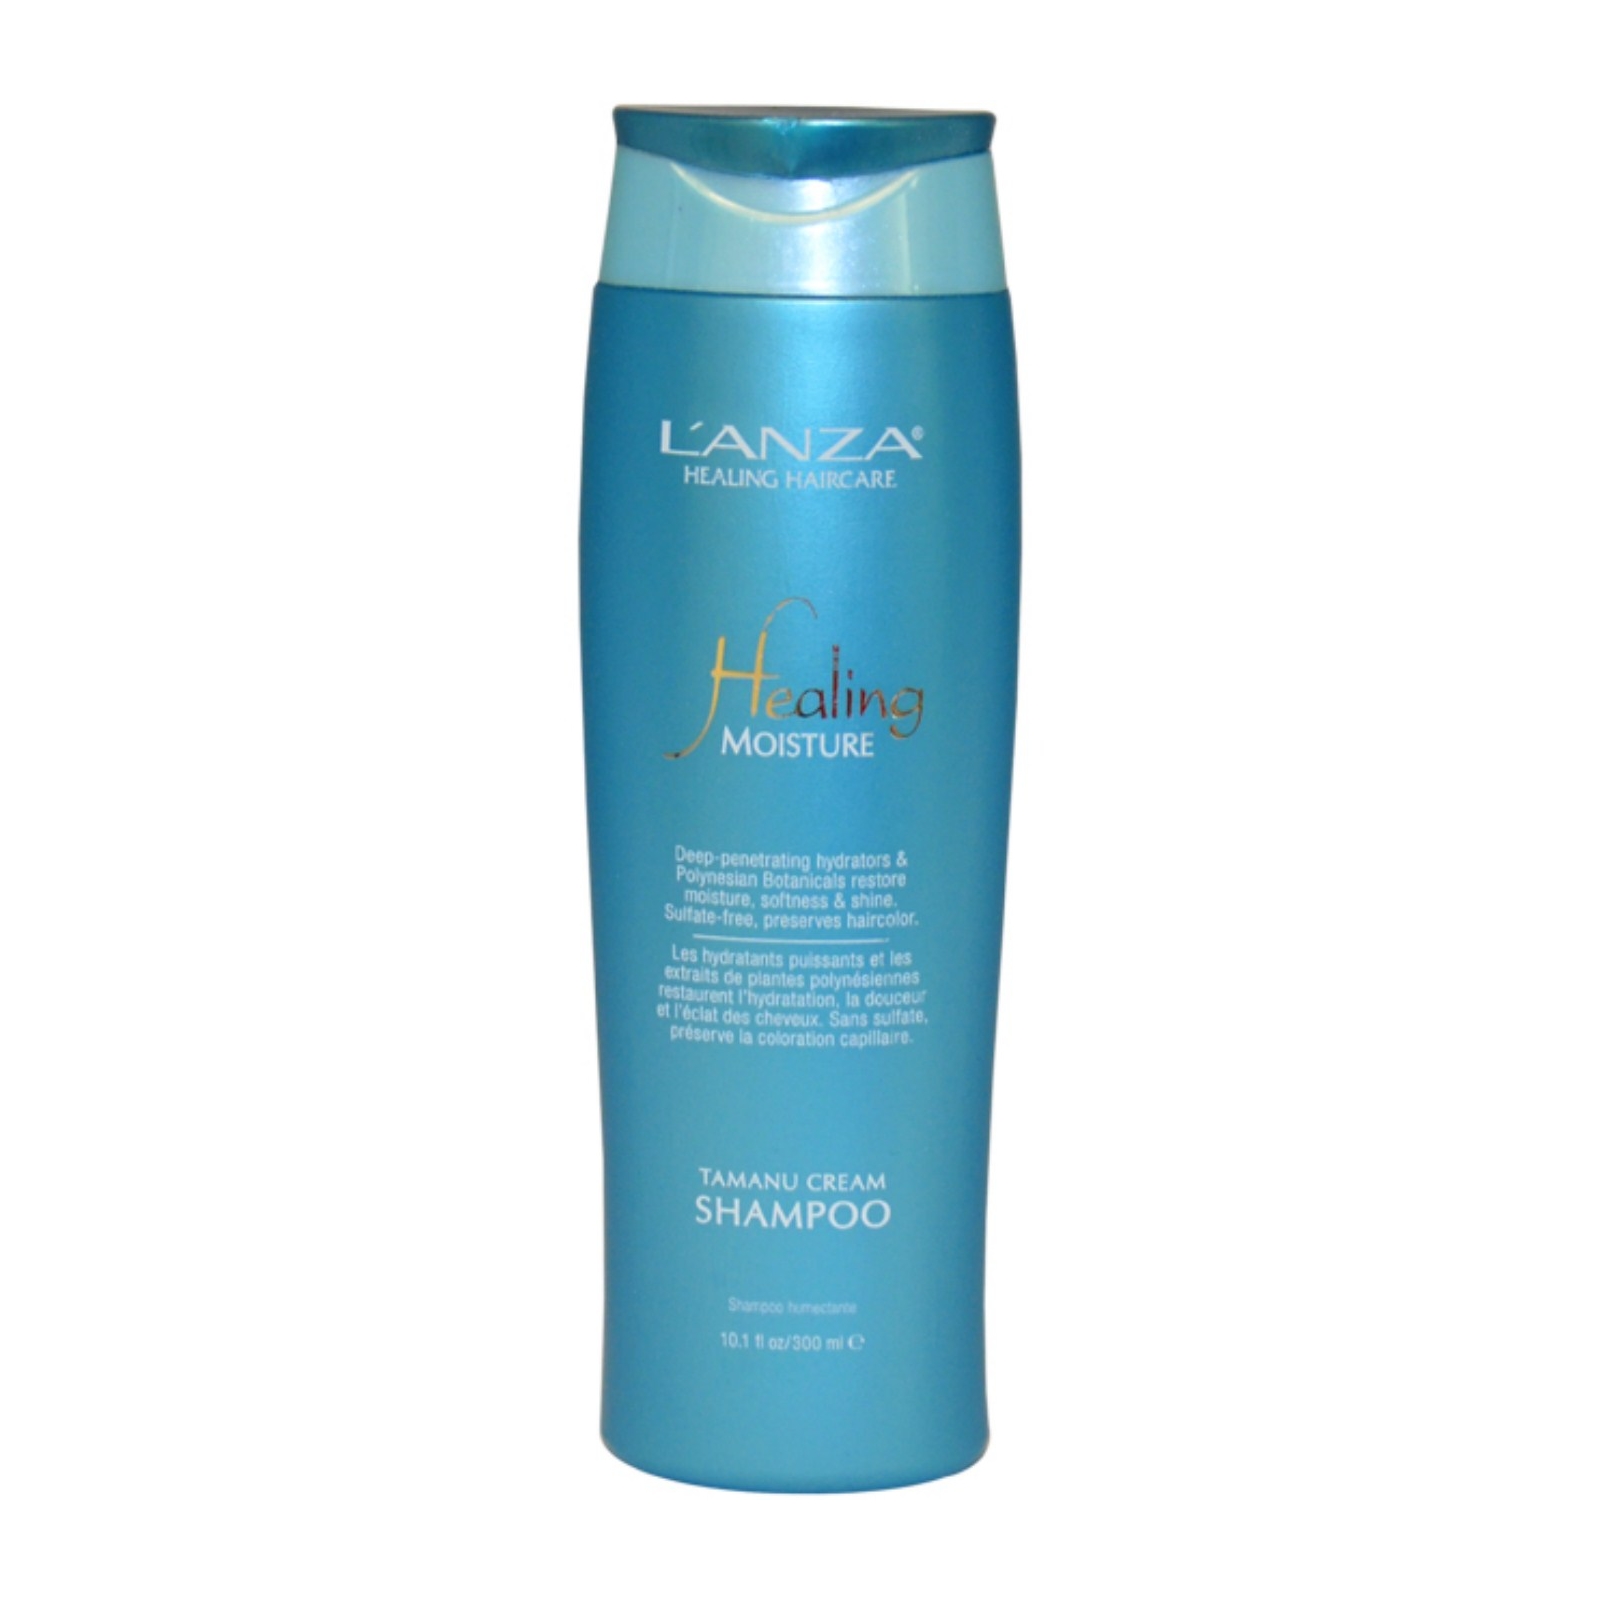 L'anza Healing Moisture Tamanu Cream Shampoo by  for Unisex - 10.1 oz Shampoo